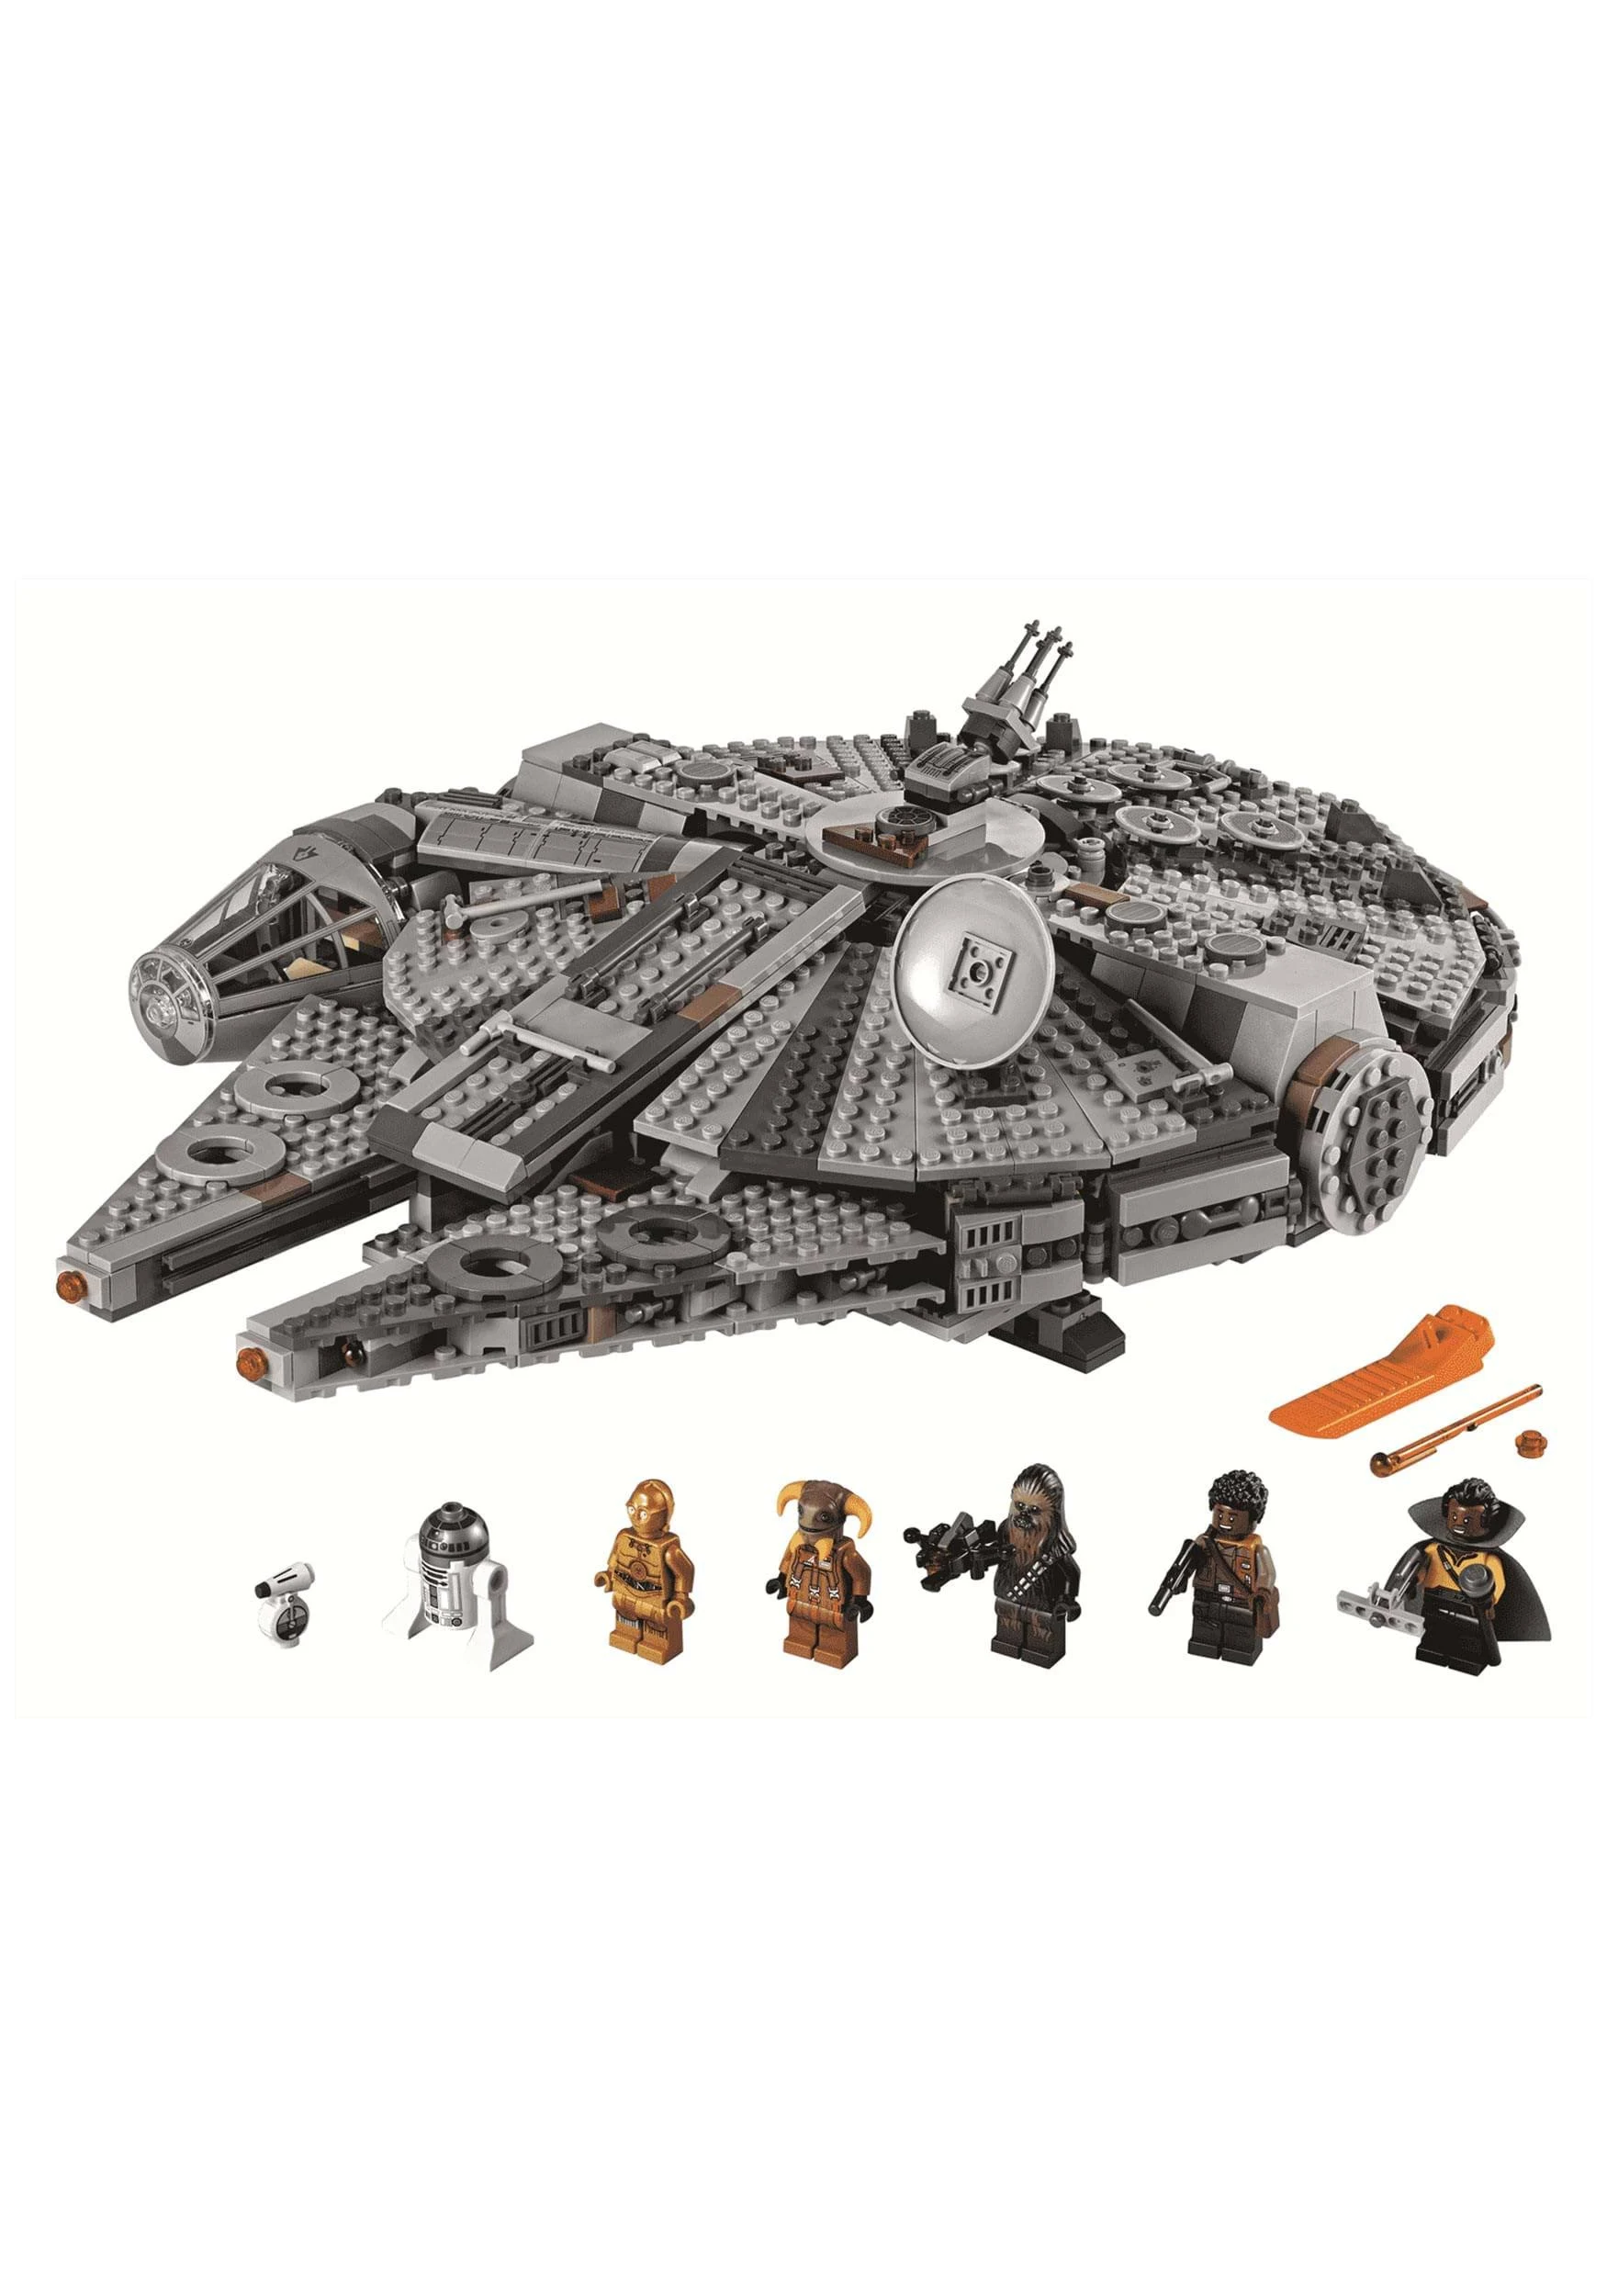 LEGO Star Wars: The Rise of Skywalker Millennium Falcon 75257 Starship